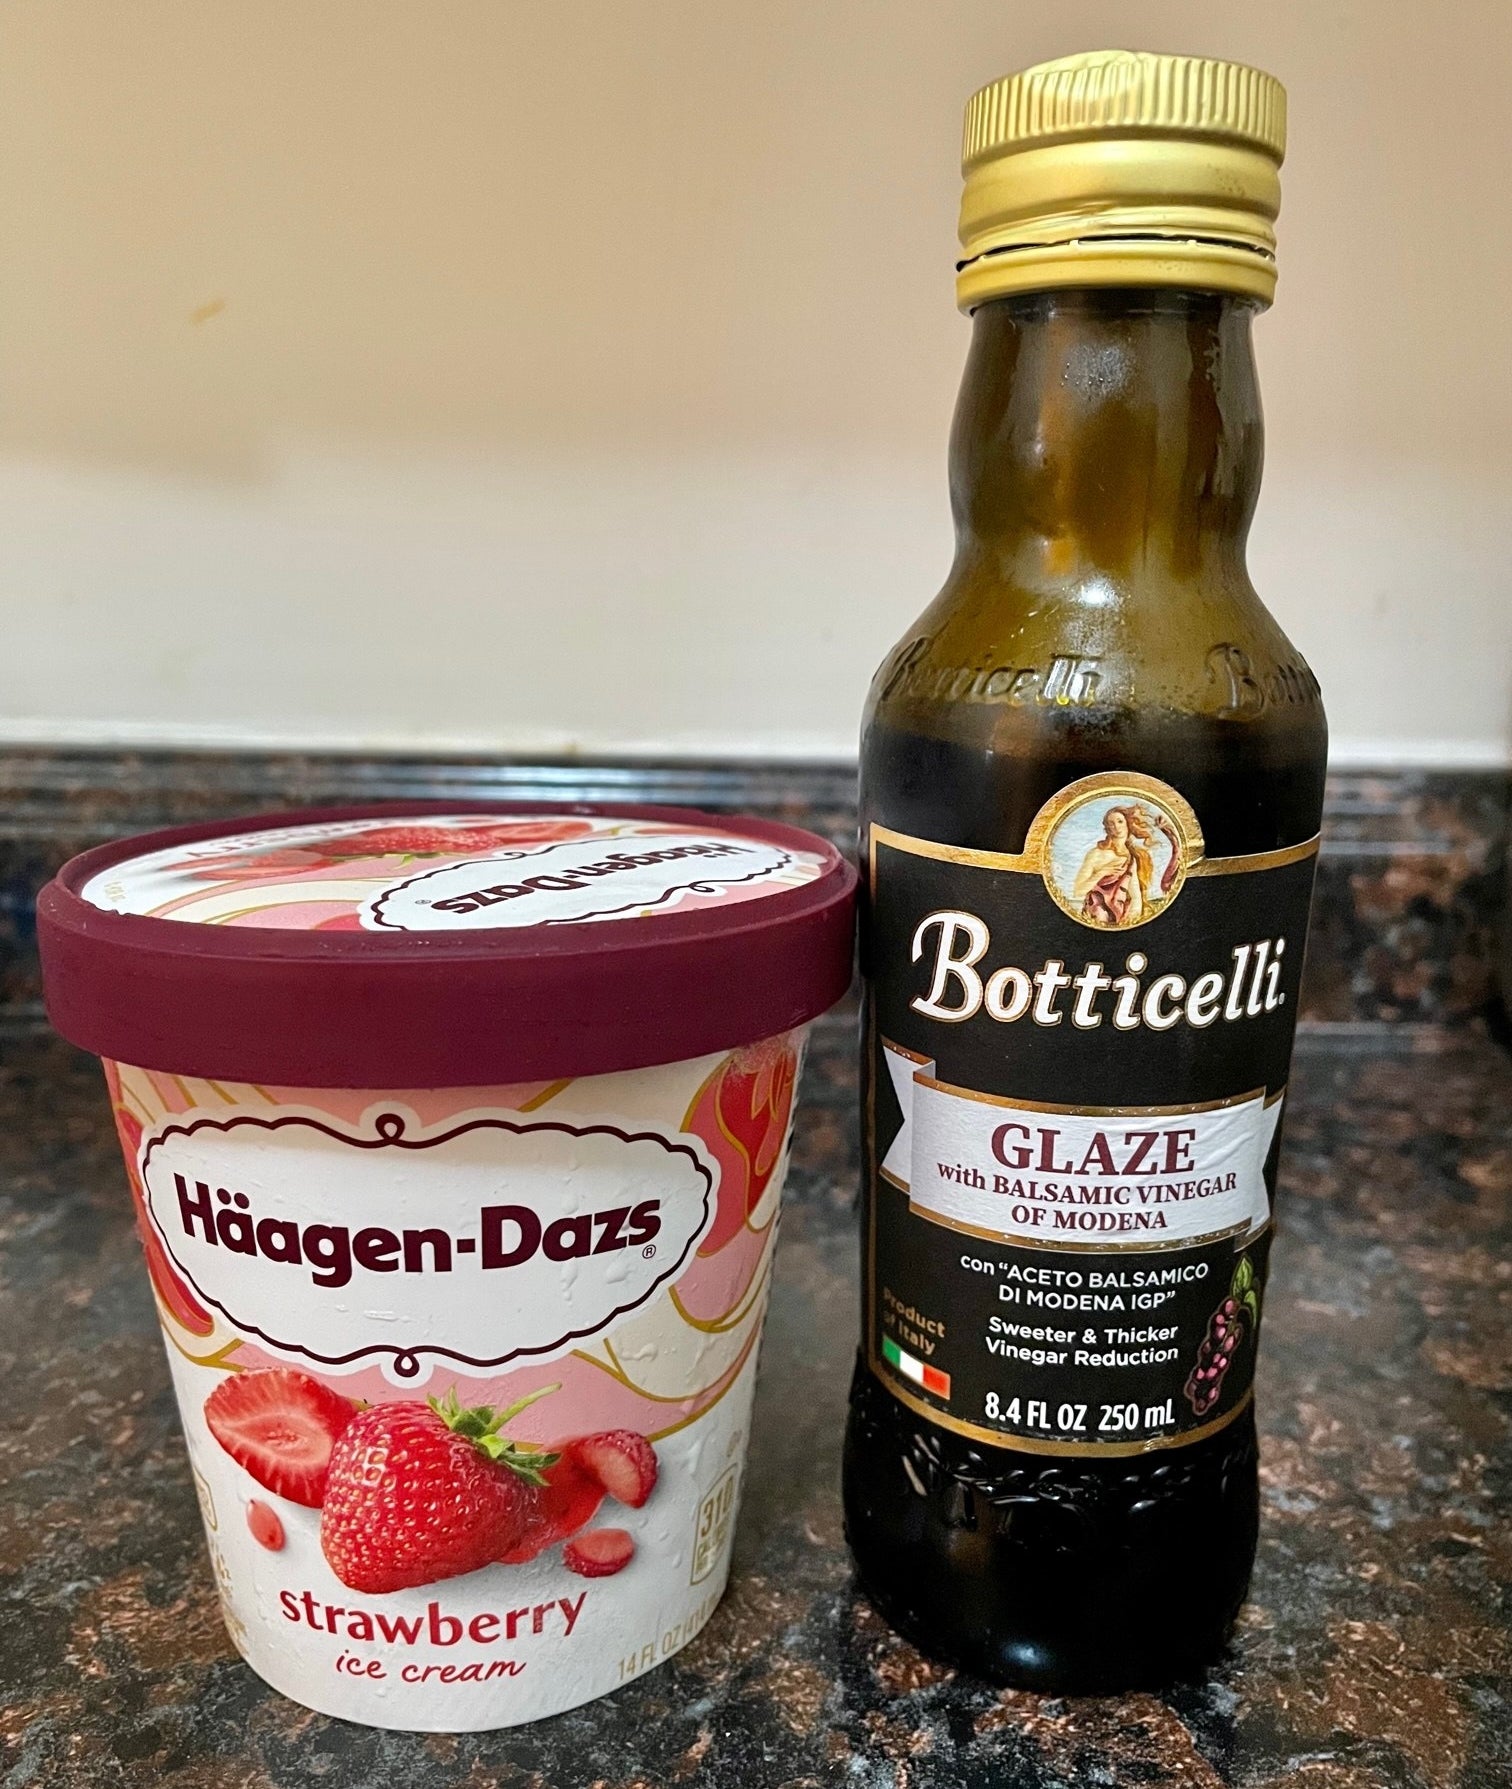 Ice cream and balsamic vinegar glaze